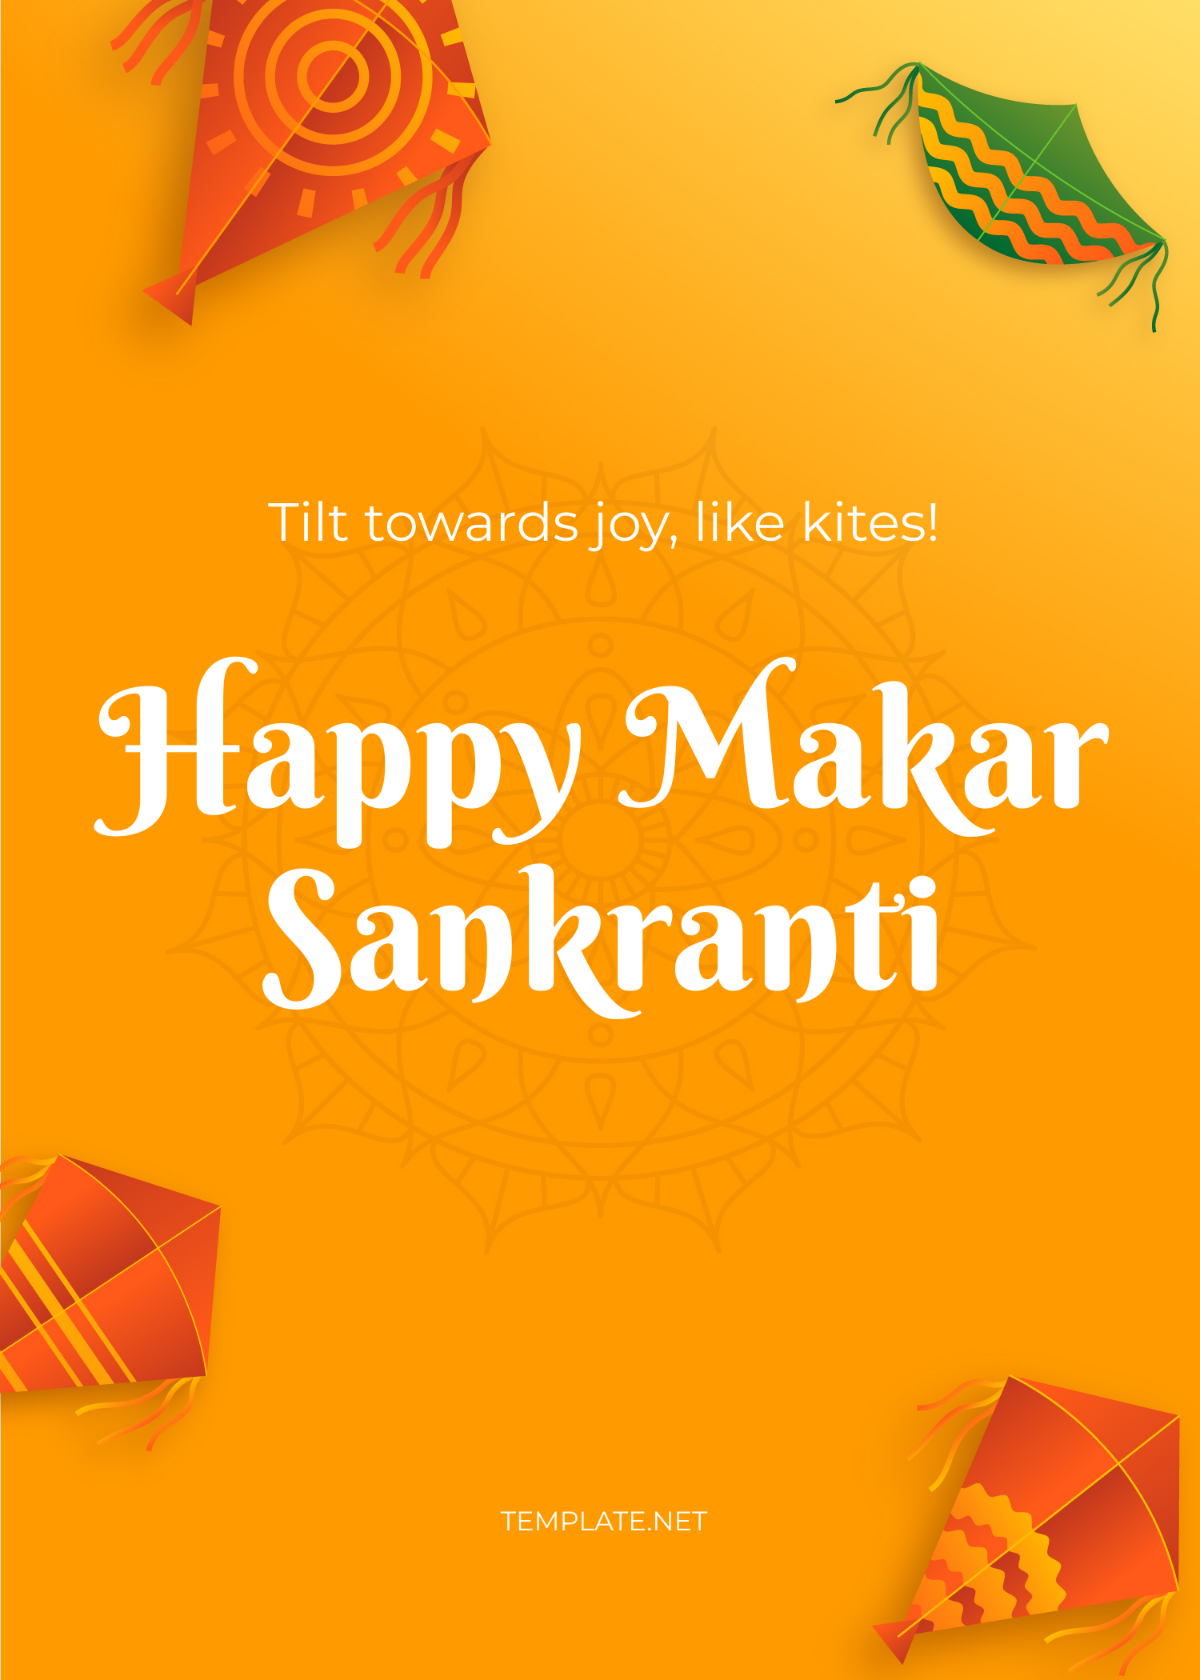 Sankranti Wishes Template